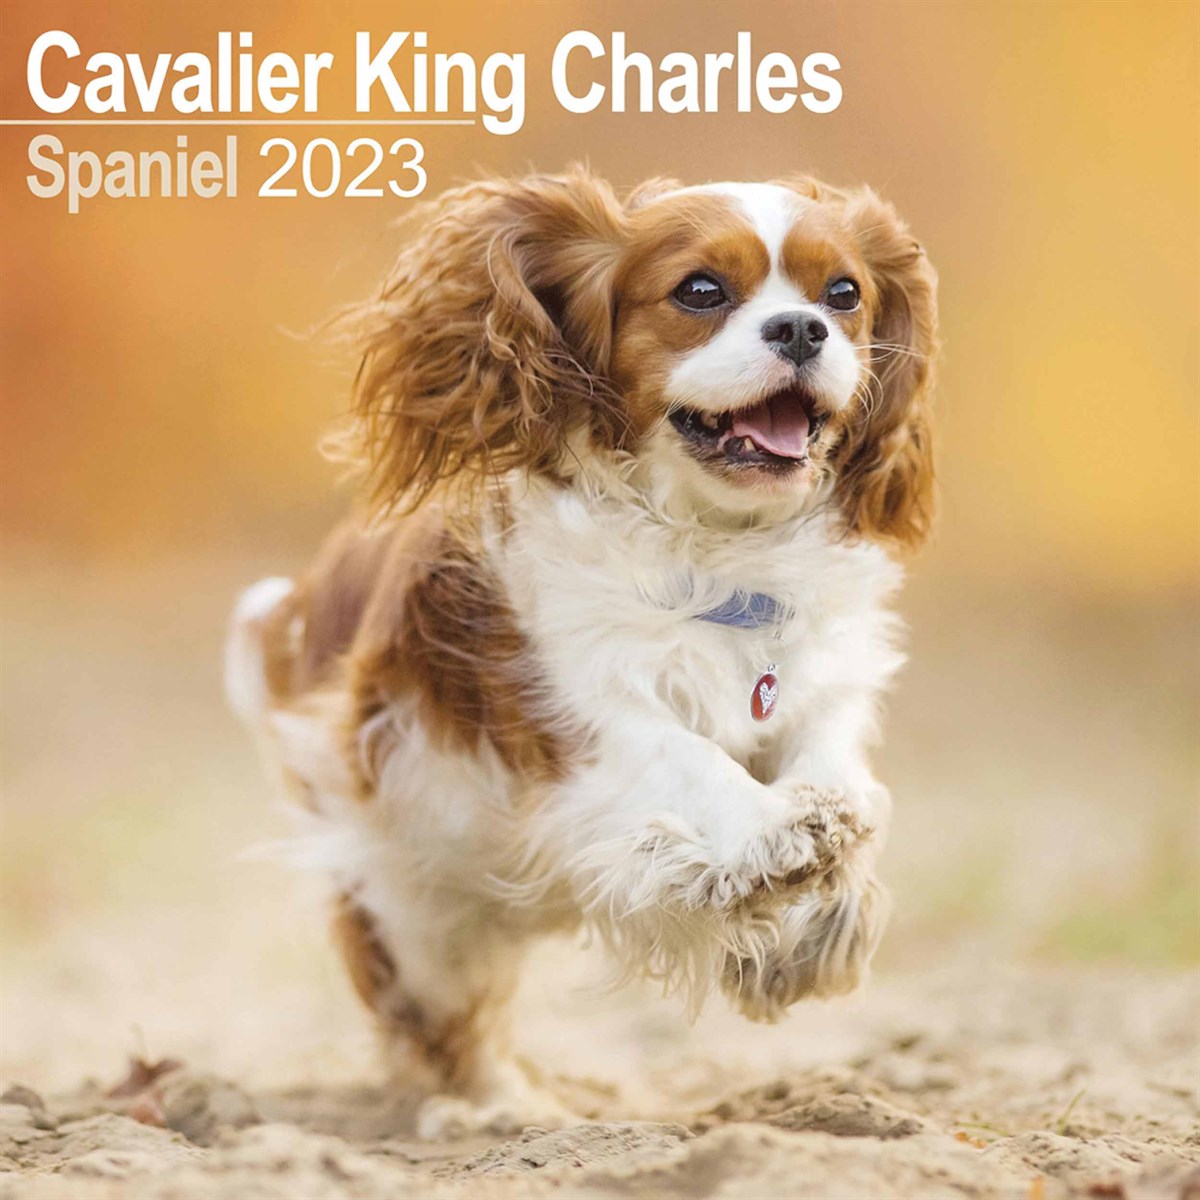 Cavalier King Charles Spaniel 2023 Calendars